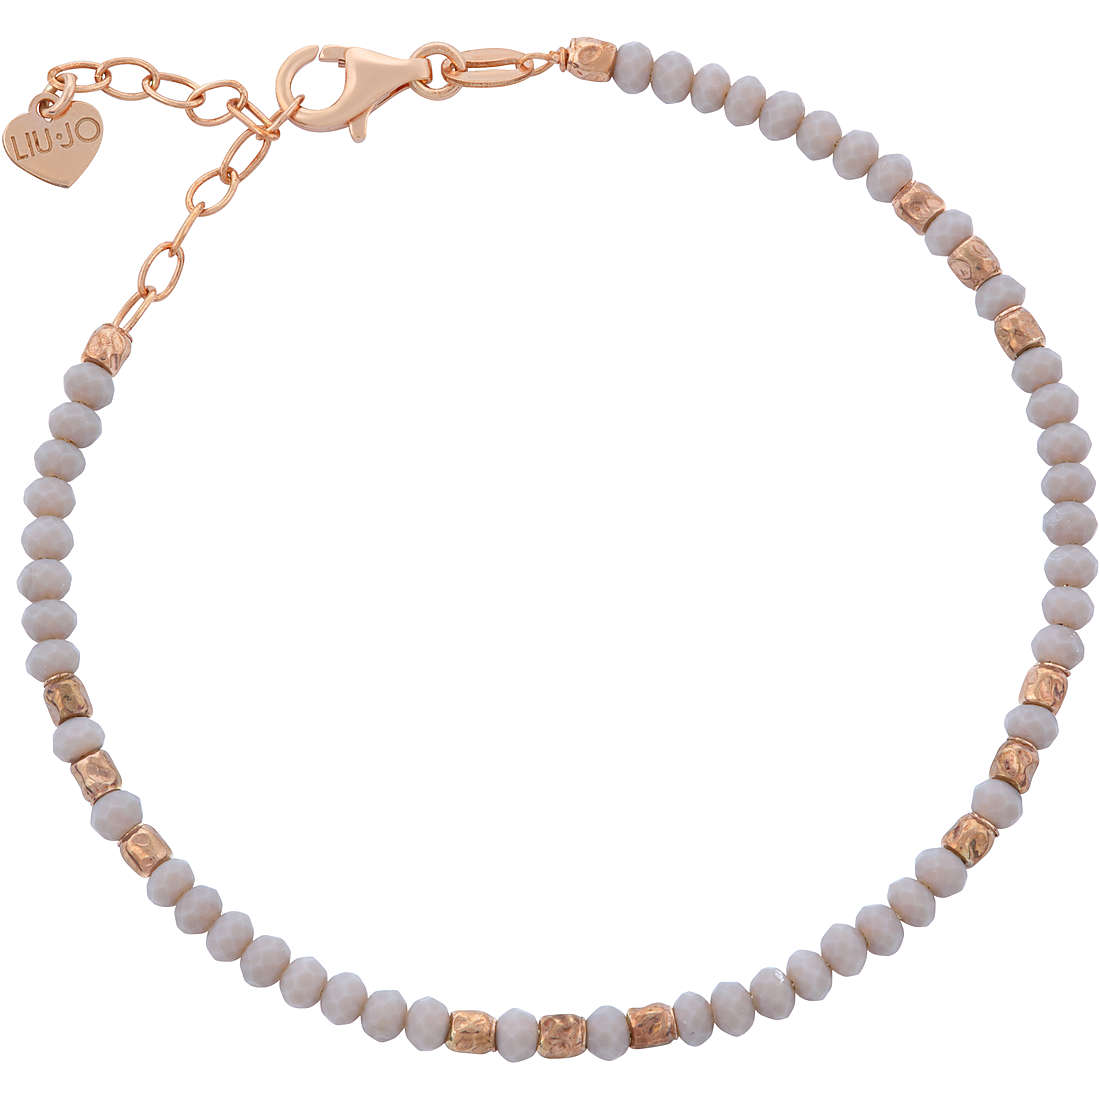 Liujo Jewels Collection bracelet woman Bracelet with 925 Silver With Beads jewel ALJ230